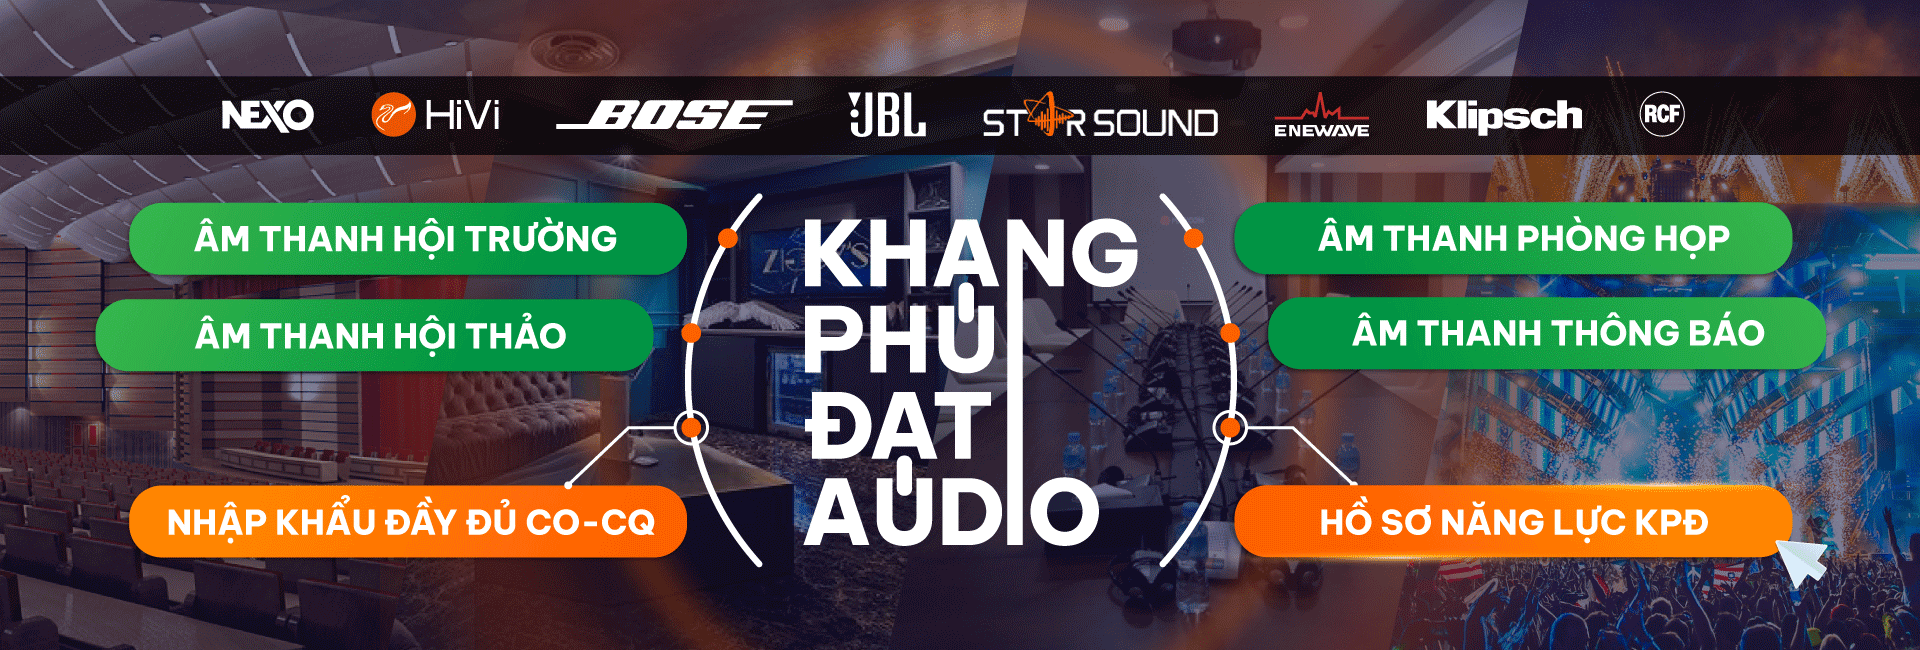 Khang-phu-dat-audio